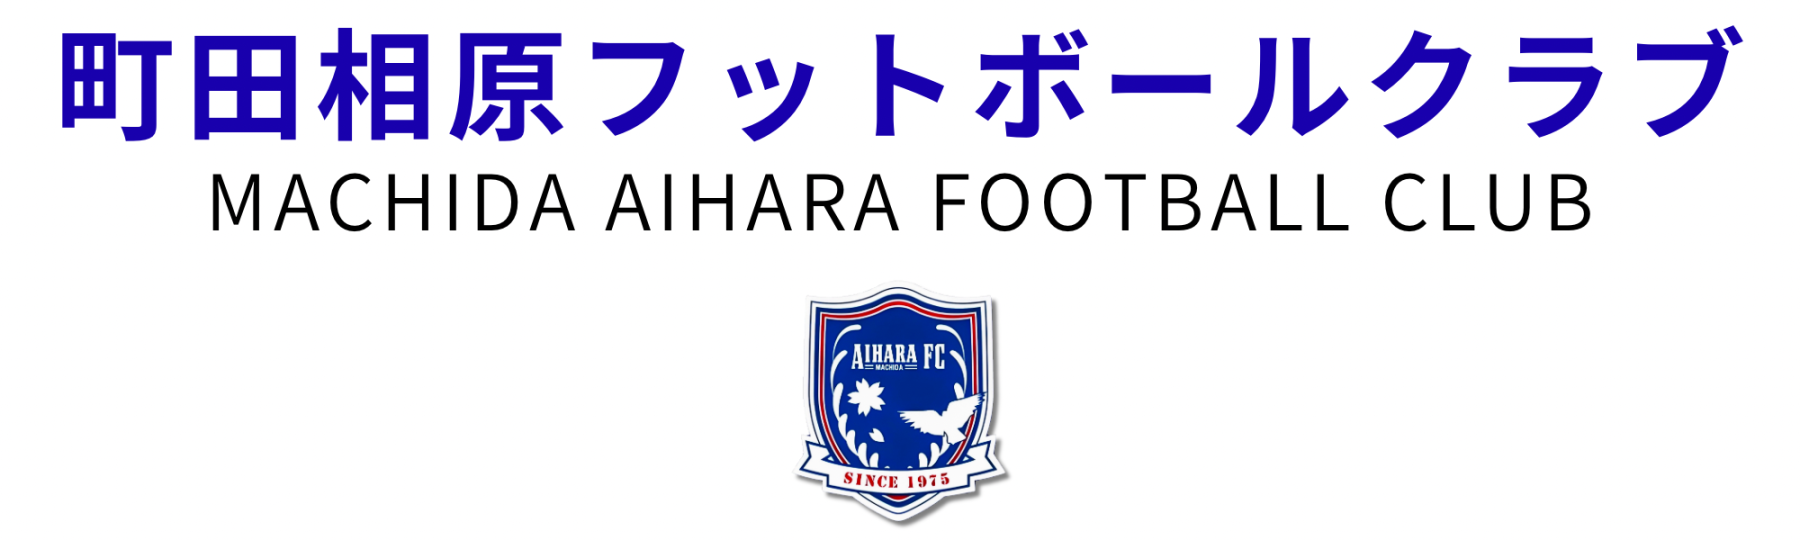 MACHIDA AIHARA FOOTBALL CLUB